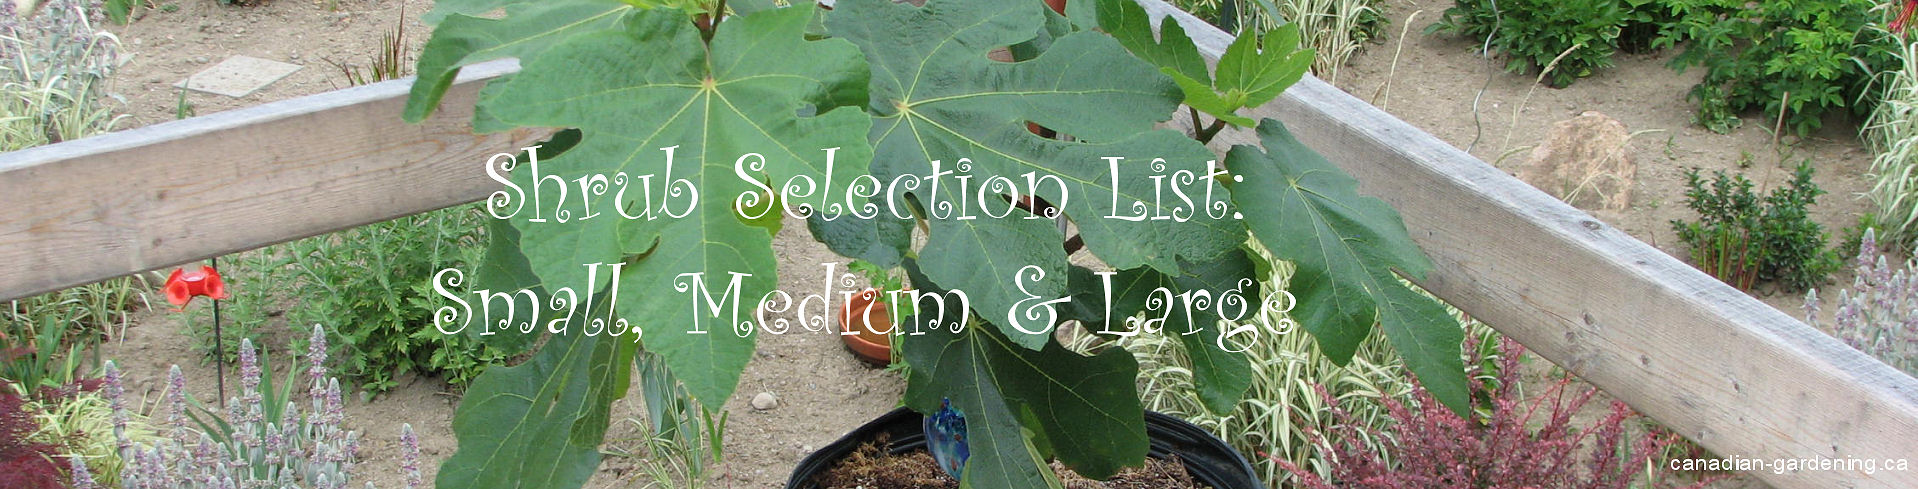 selection shrubs, small, medium, large and description